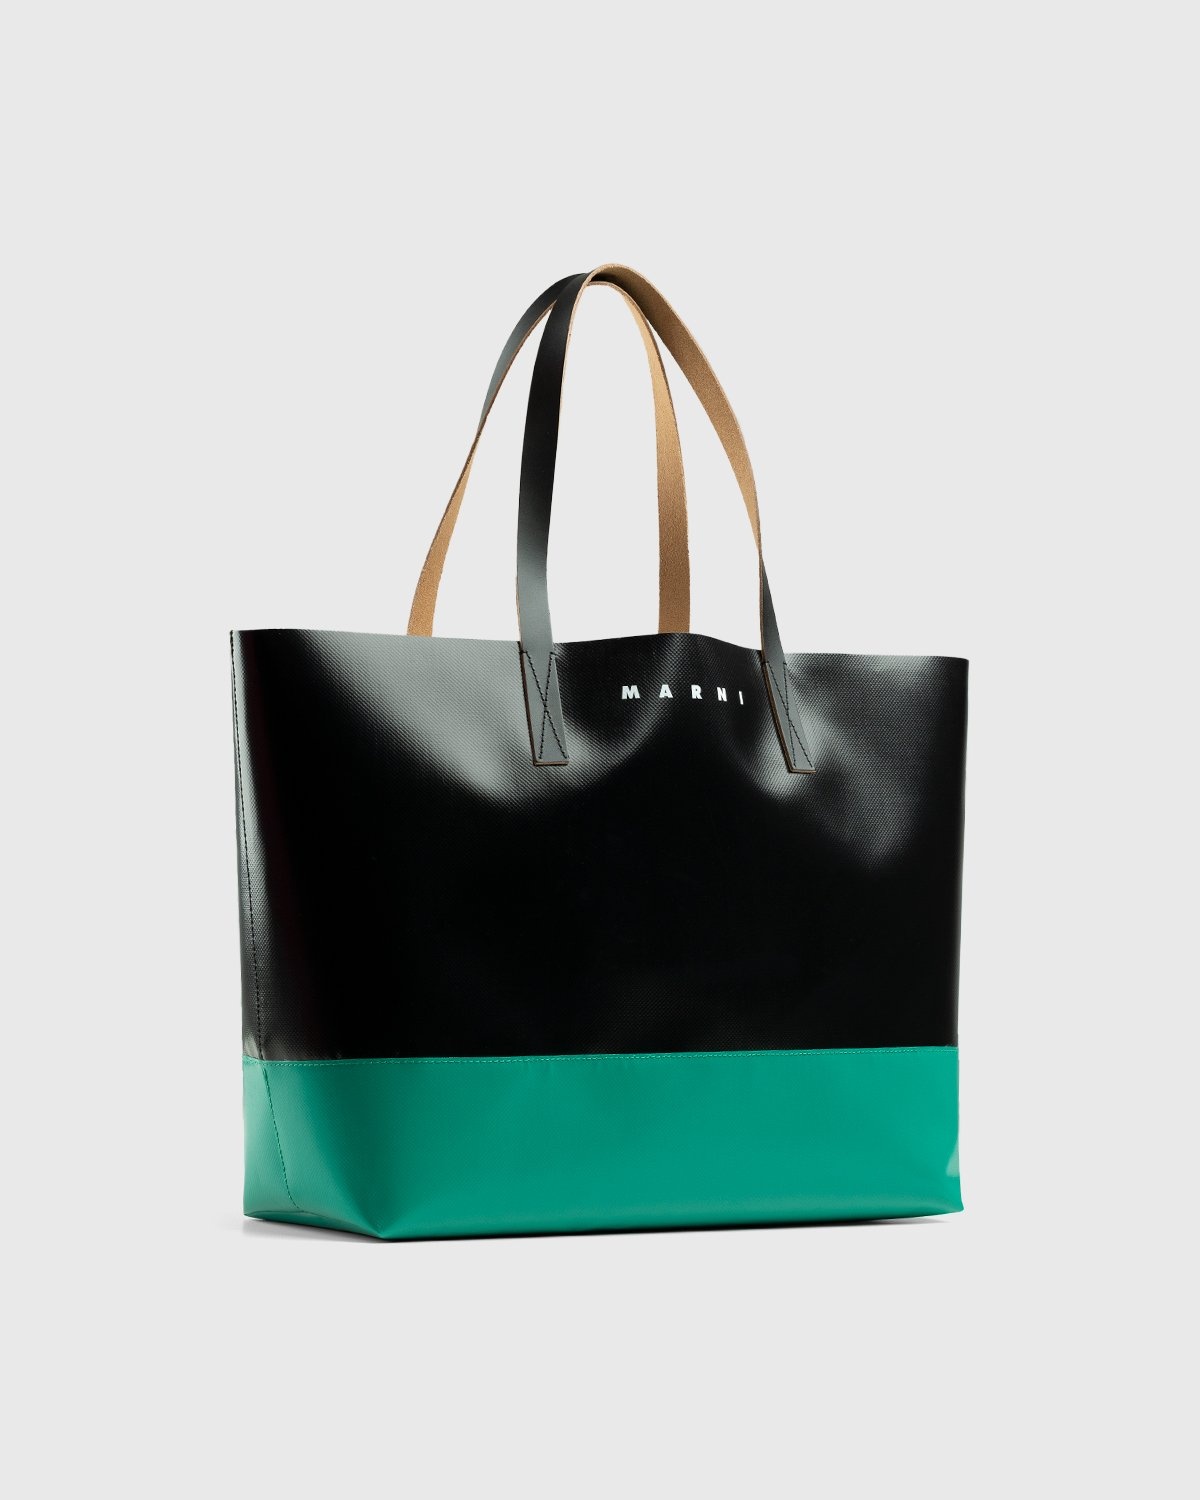 Marni – Tribeca Two-Tone Tote Bag Black/Green - Tote Bags - Black - Image 3